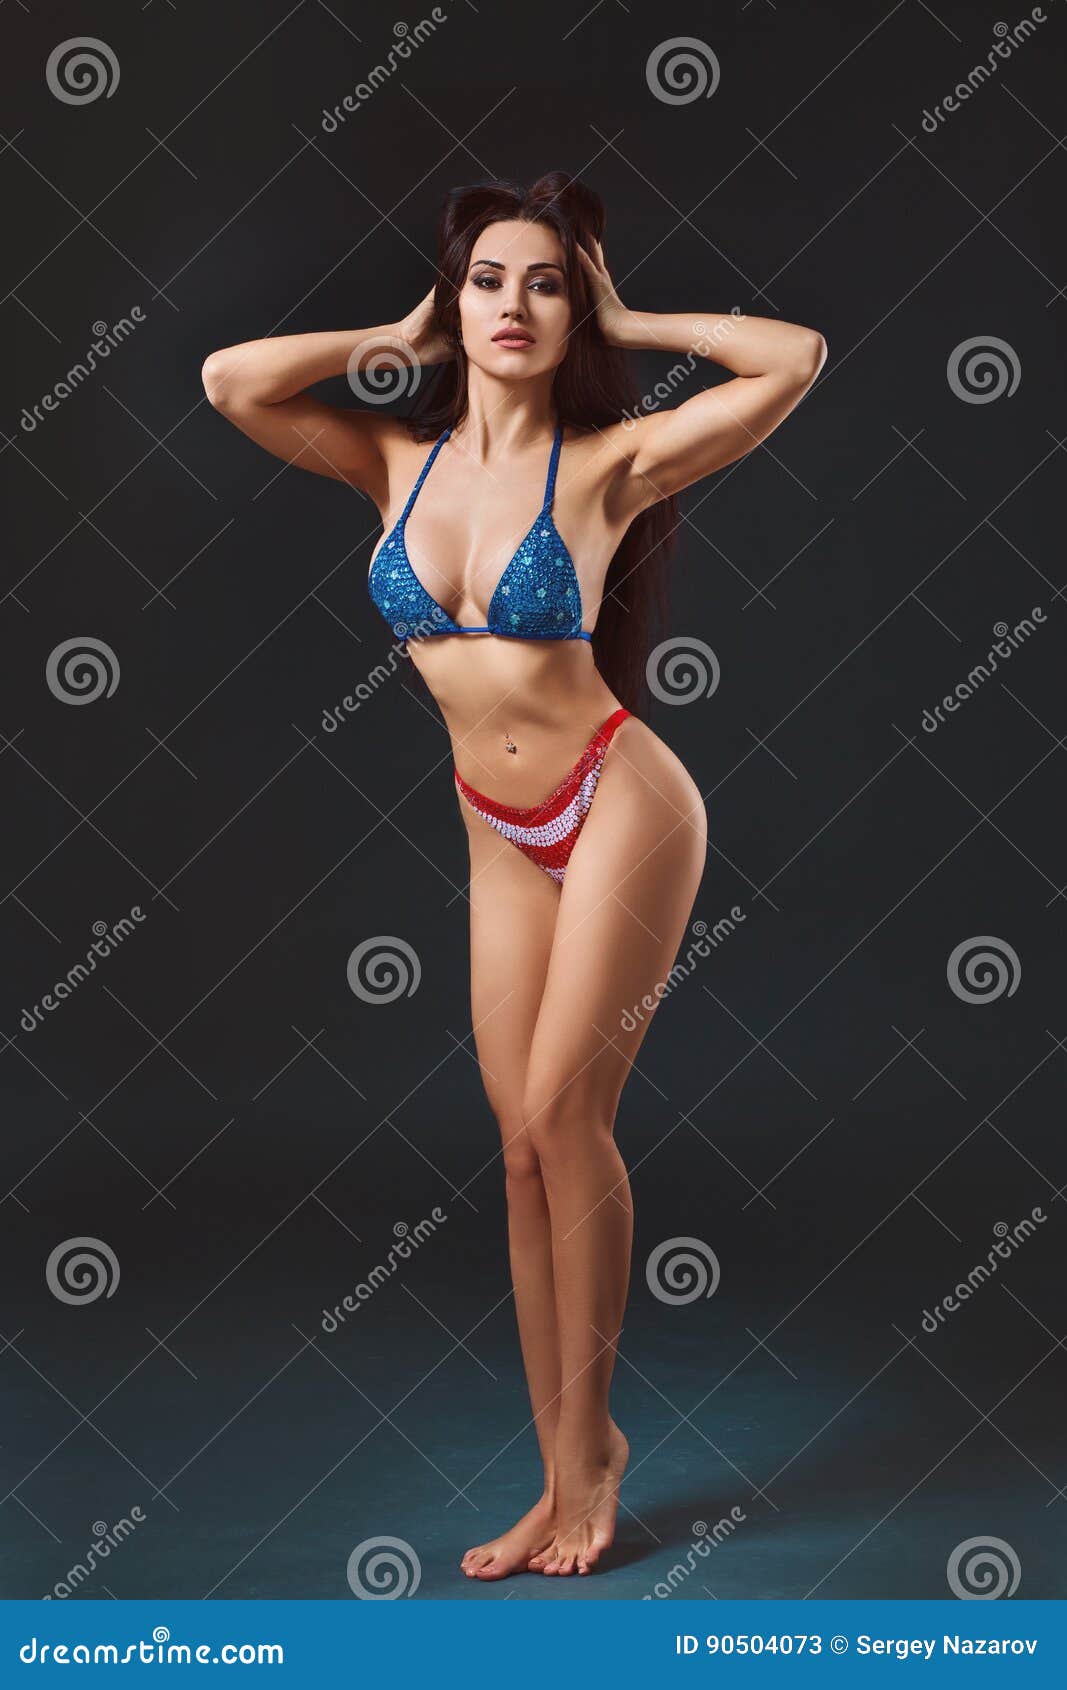 amanda cheung add hot woman strip tease photo